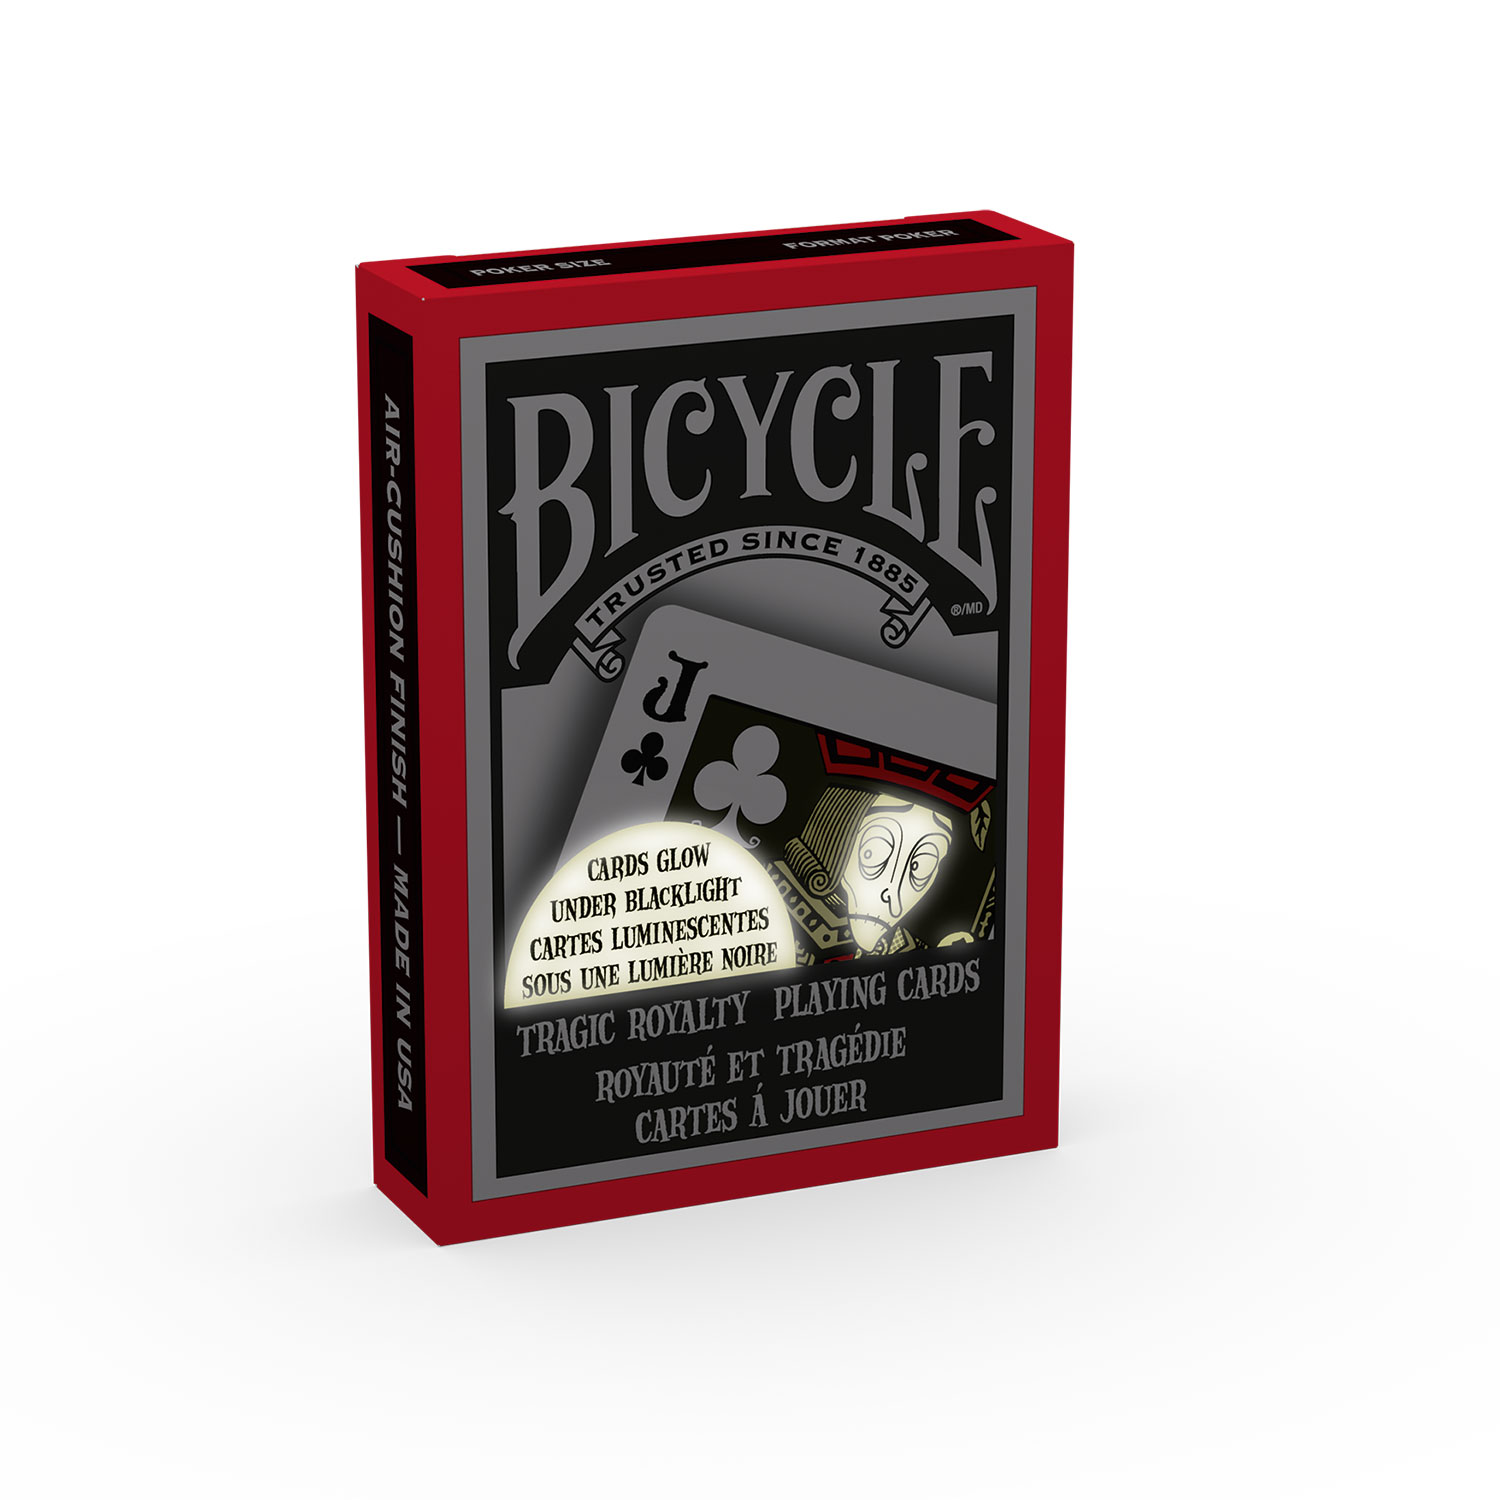 ASS ALTENBURGER Bicycle Kartendeck - Tragic Royalty Kartenspiel